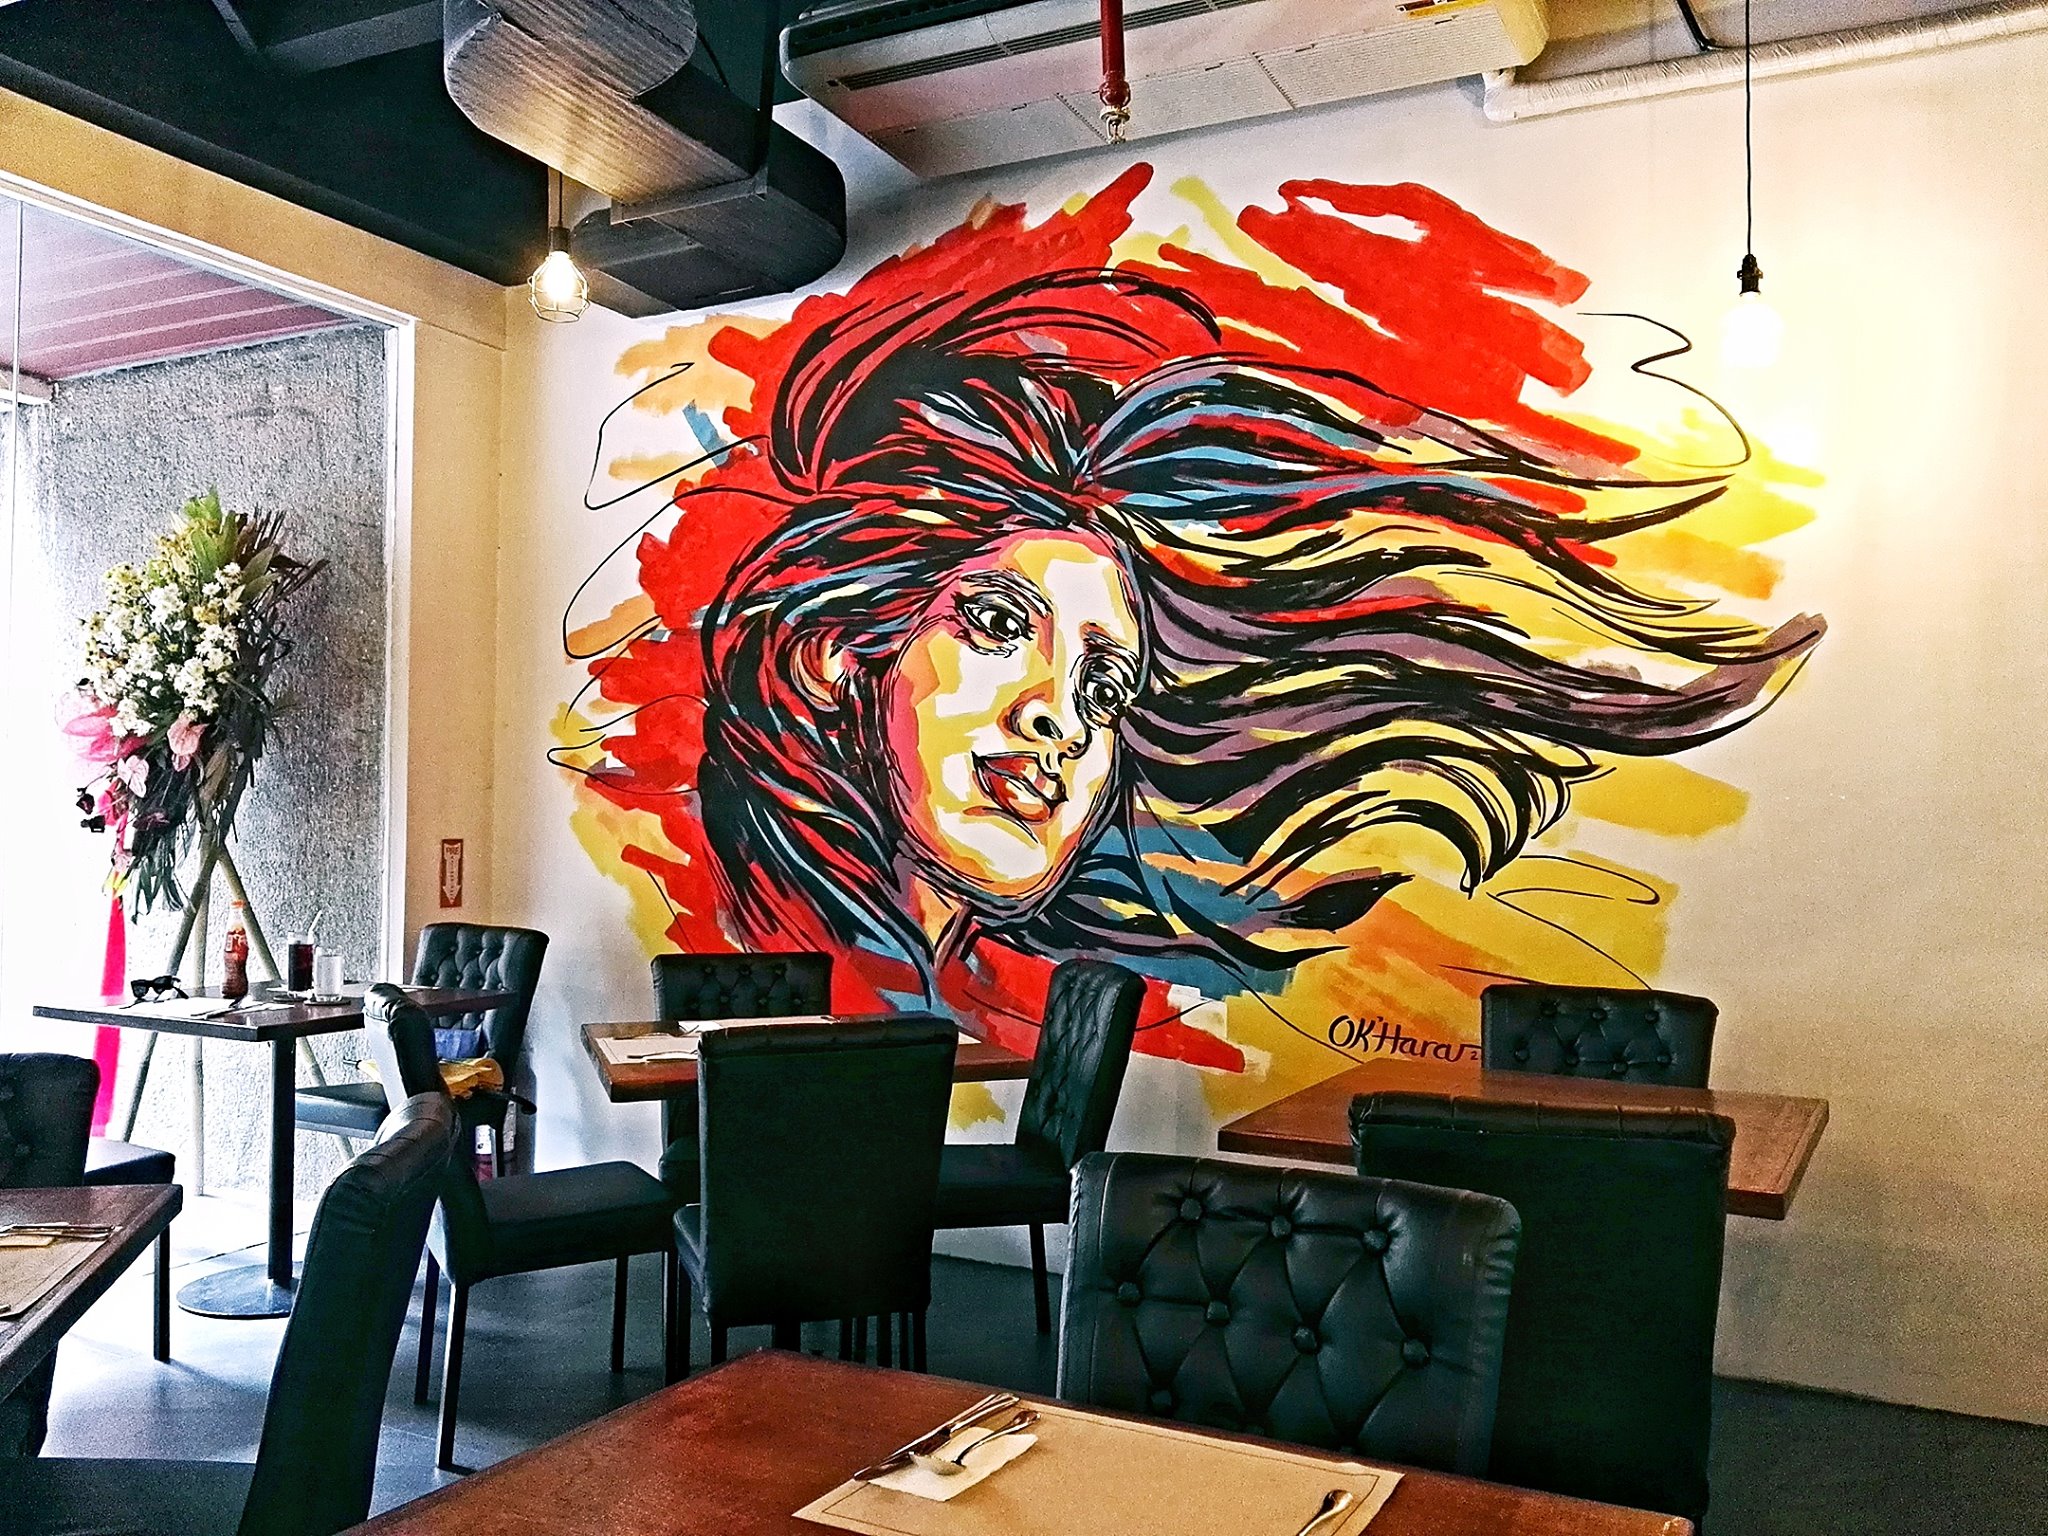 New Indonesian Restaurant Alert: Restoran Garuda in Legazpi Village, Makati